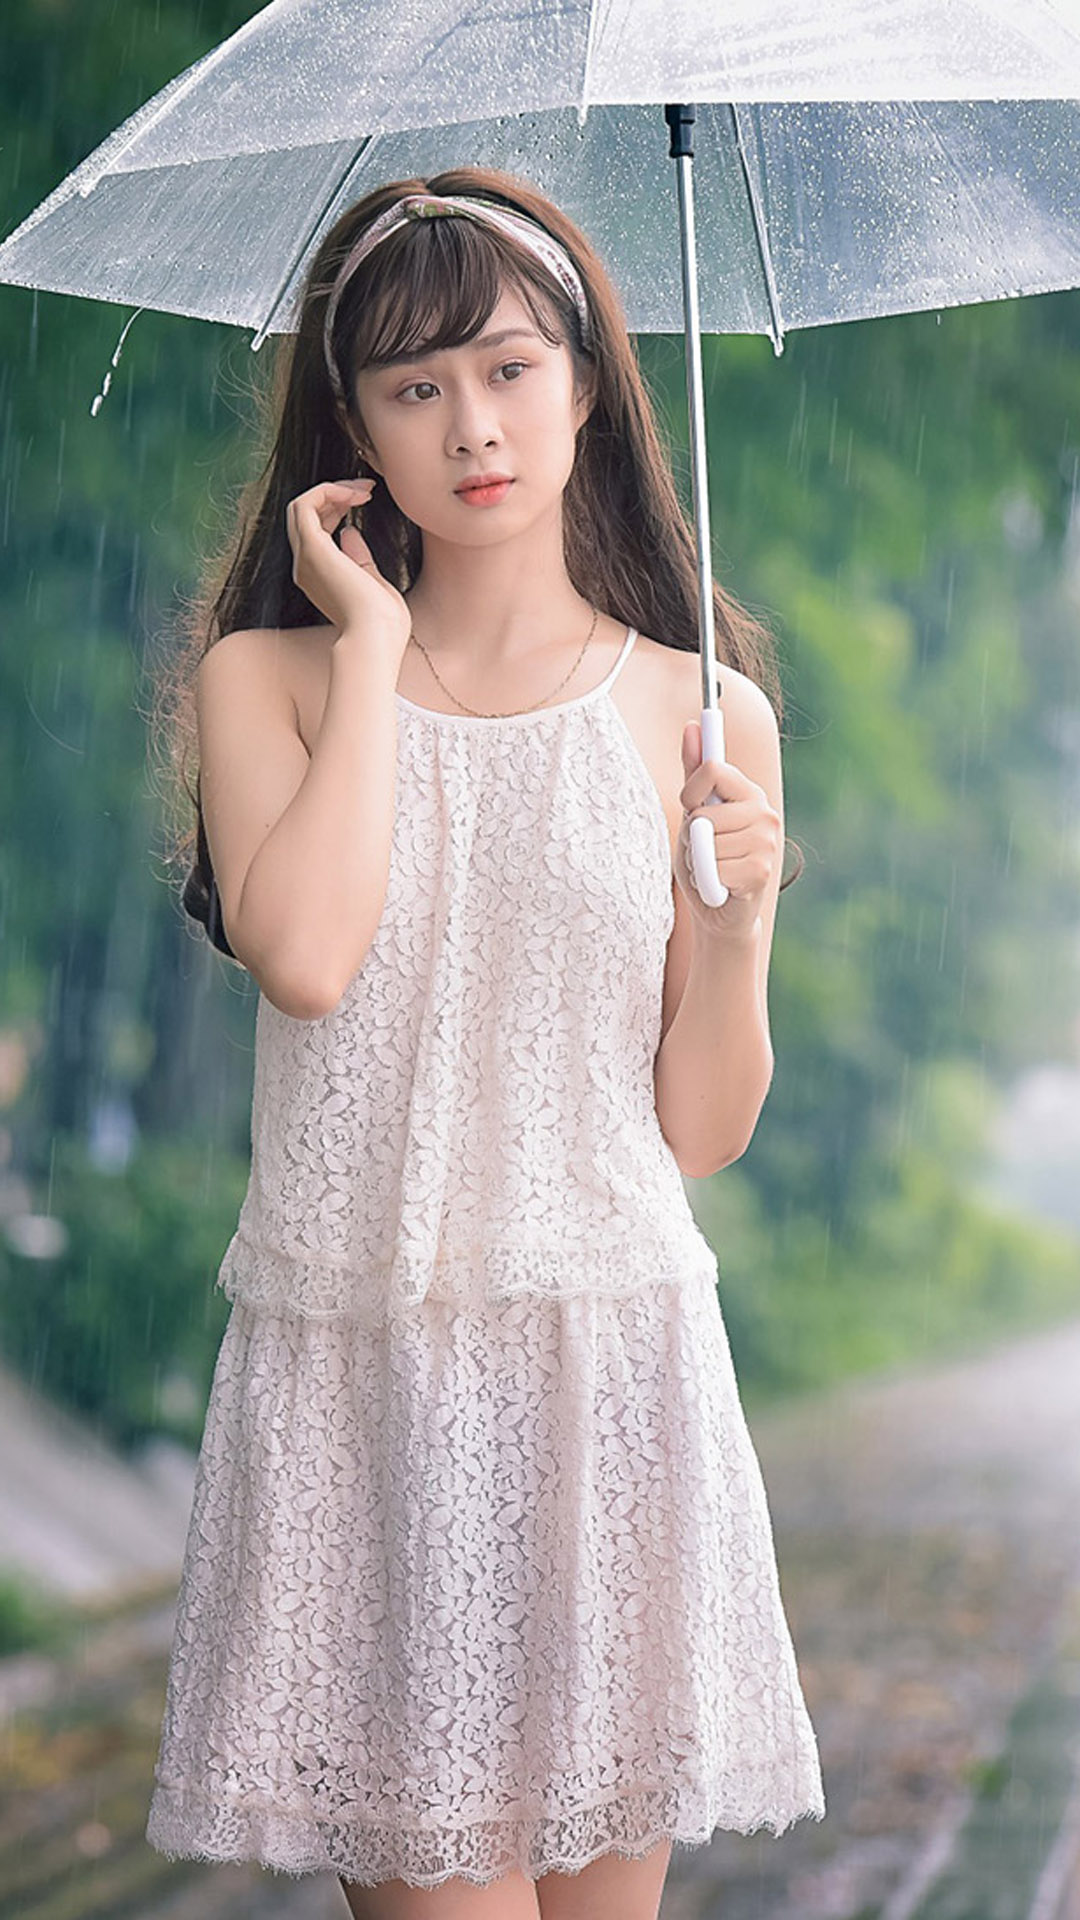 Cute Asian Girl Posing In Rain Hd Mobile Wallpaper - Asian Girl With Umbrella - HD Wallpaper 